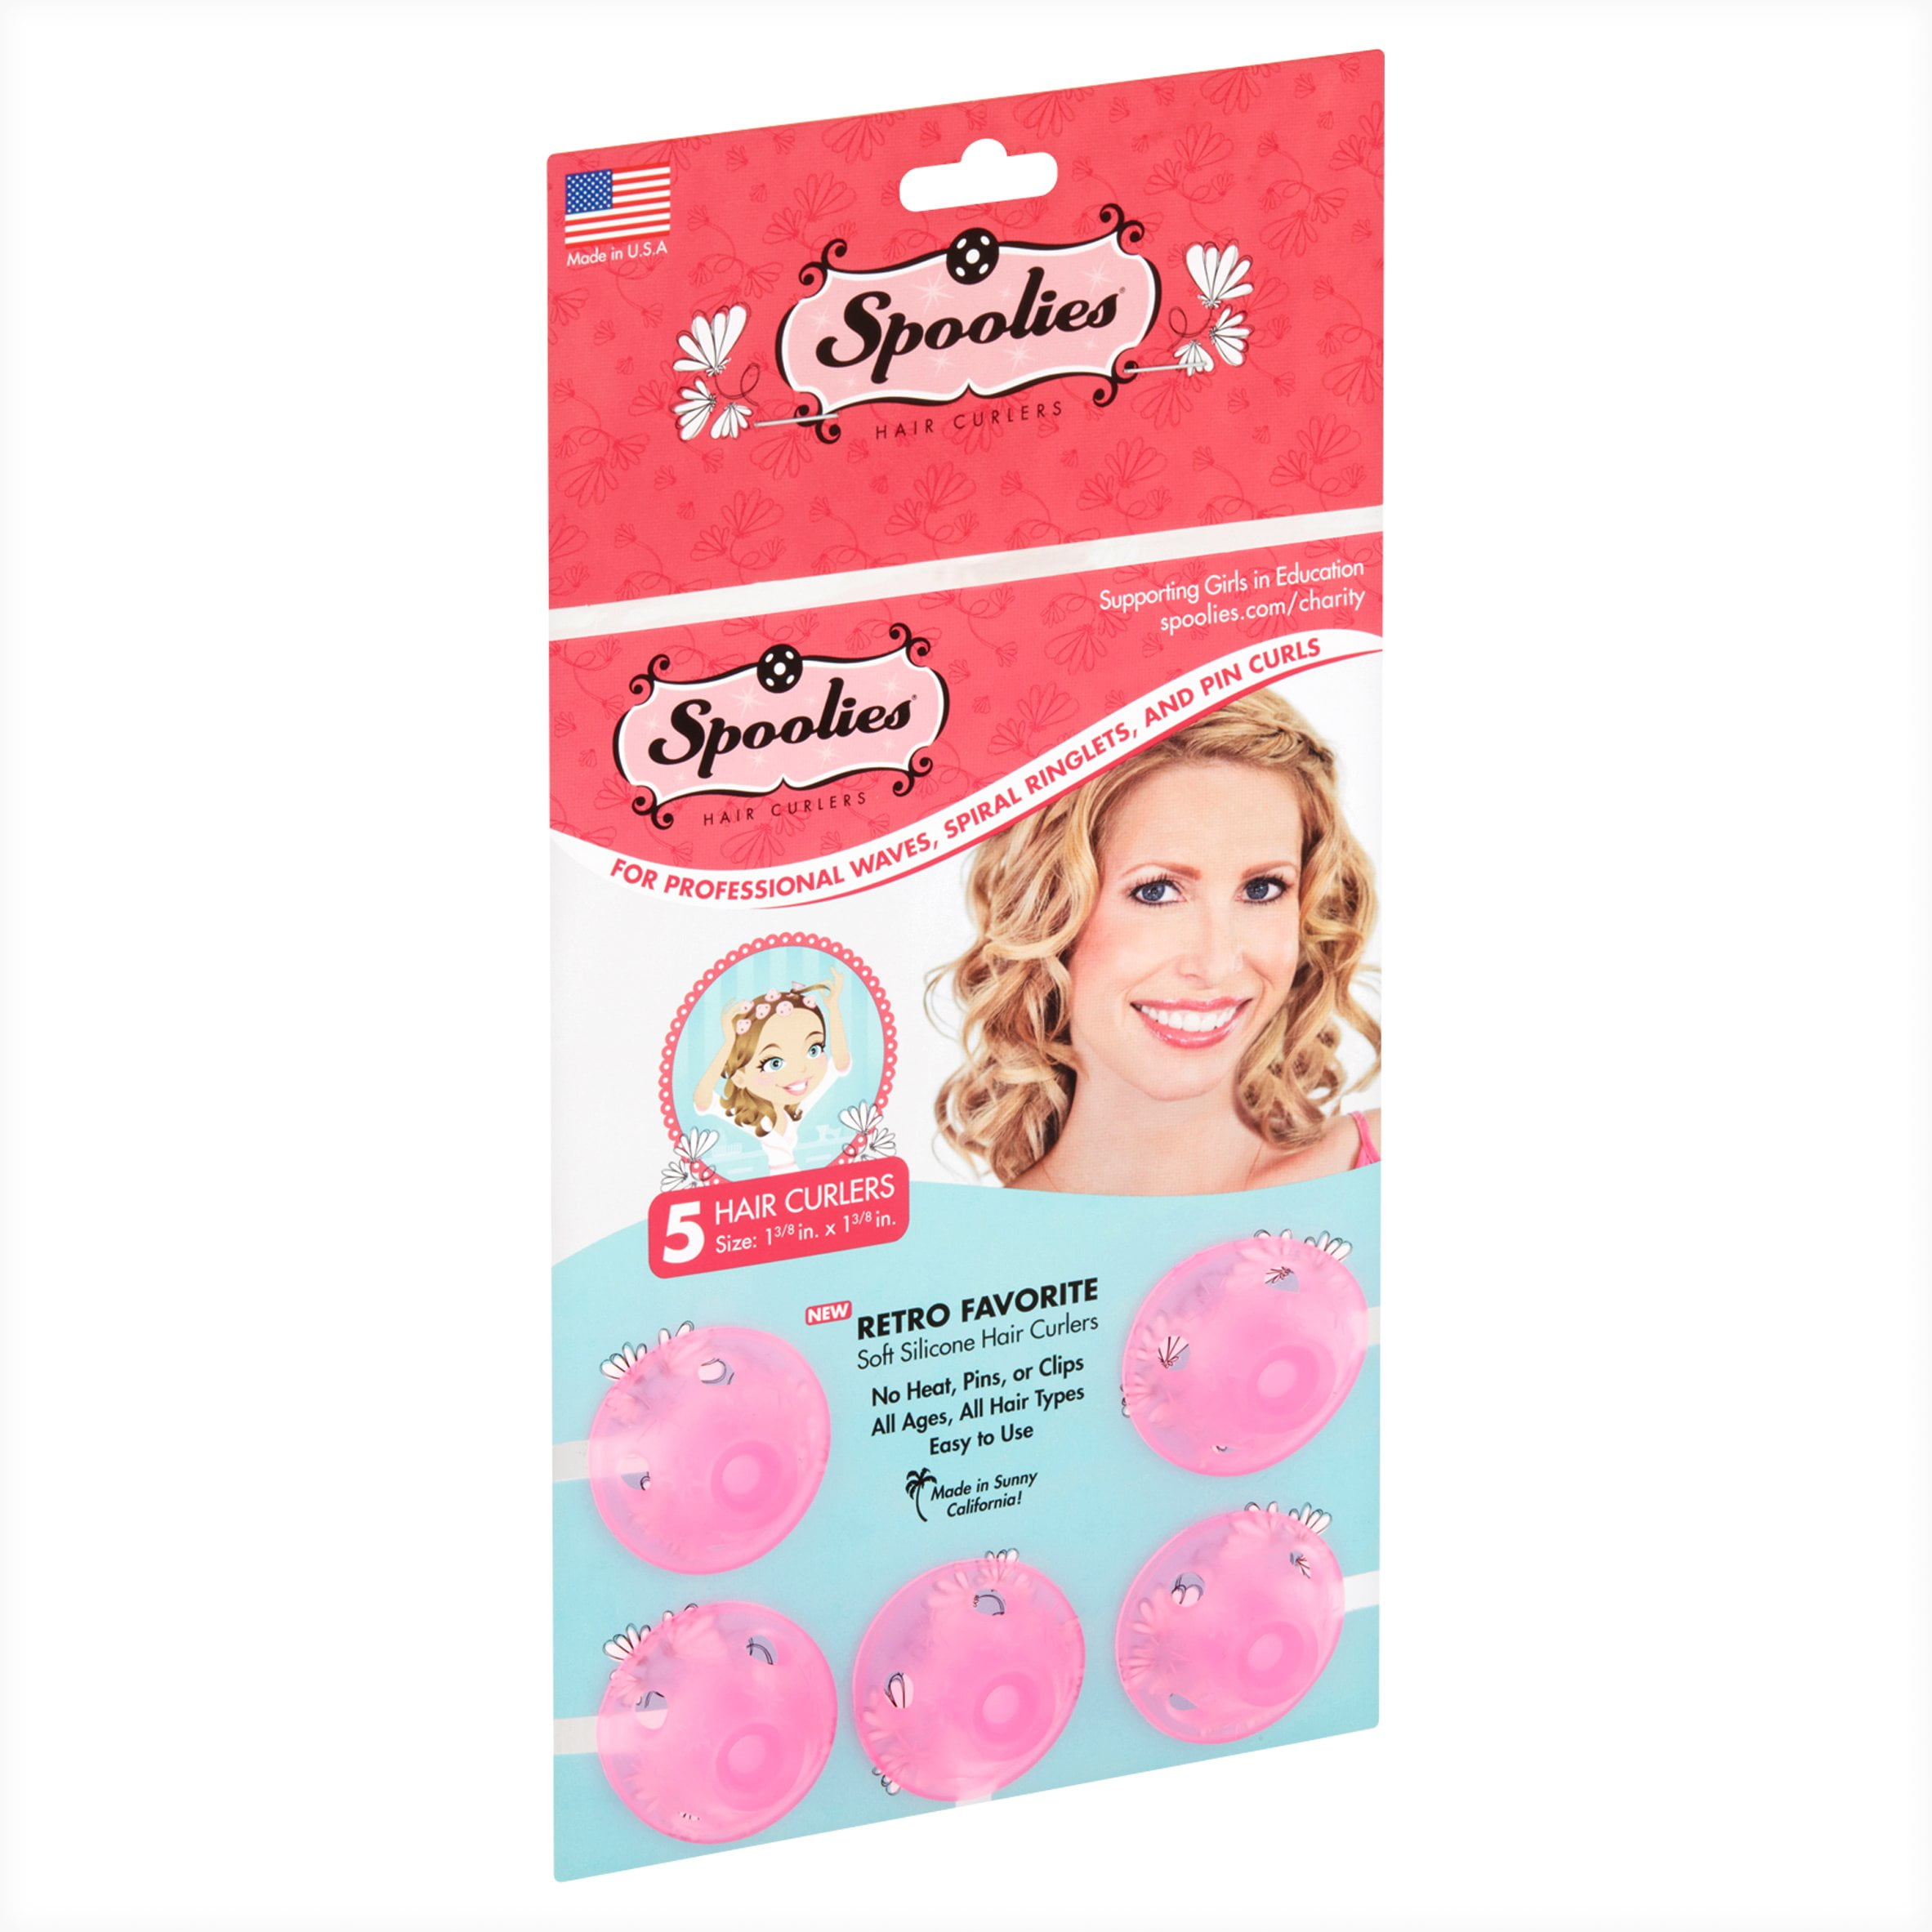 Spoolies Playful Hair Curlers, Pink, 5 ct 